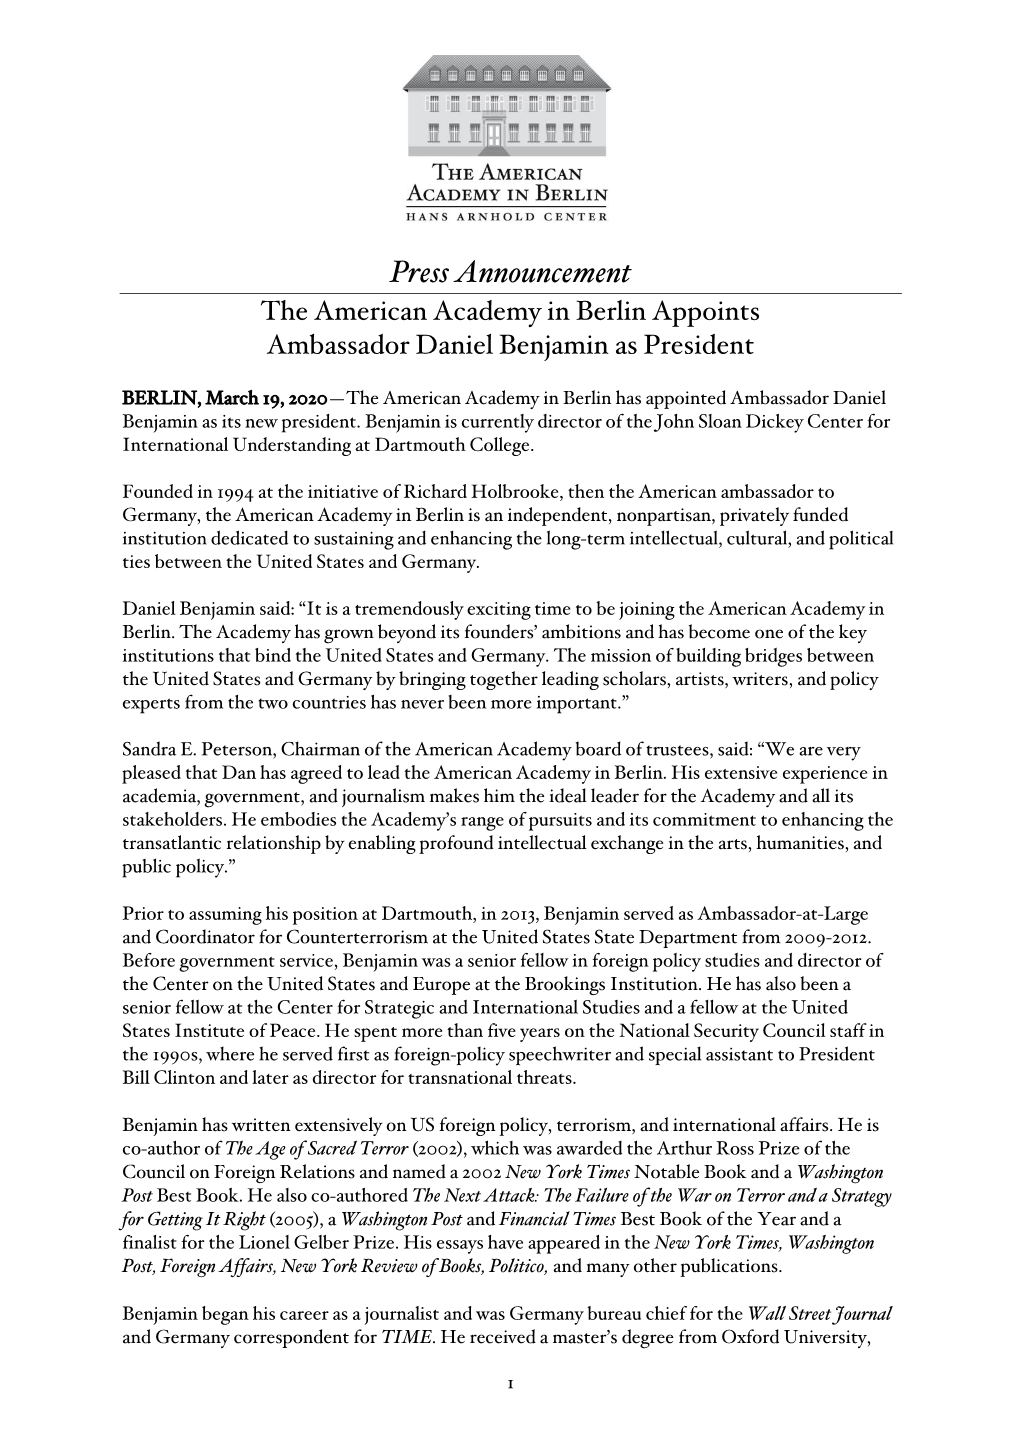 Press Announcement the American Academy in Berlin Appoints Ambassador Daniel Benjamin As President